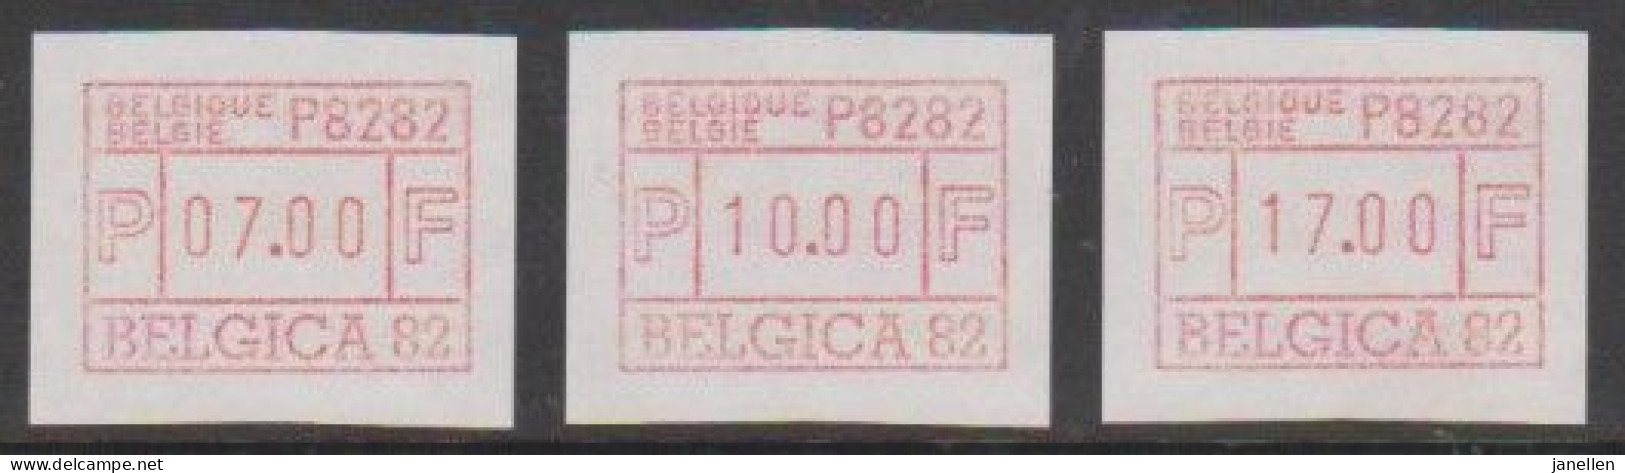 ATM 6A - Belgica 82 - Mint